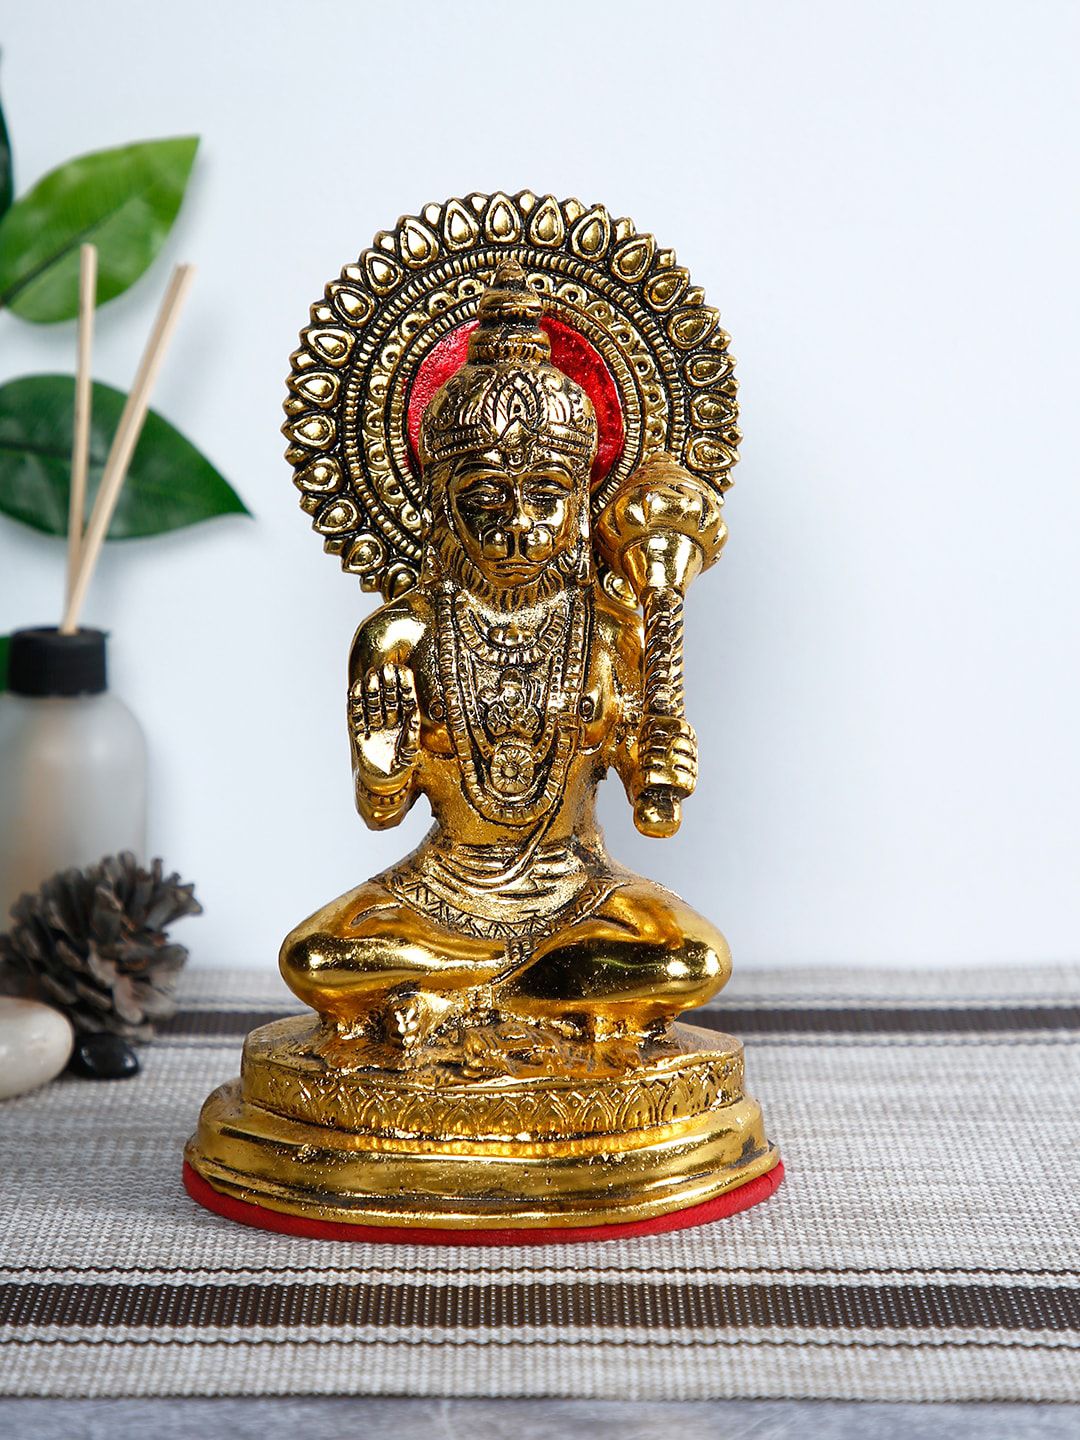 CraftVatika Gold-Toned & Red Lord Hanuman Idol Statue Showpiece Price in India